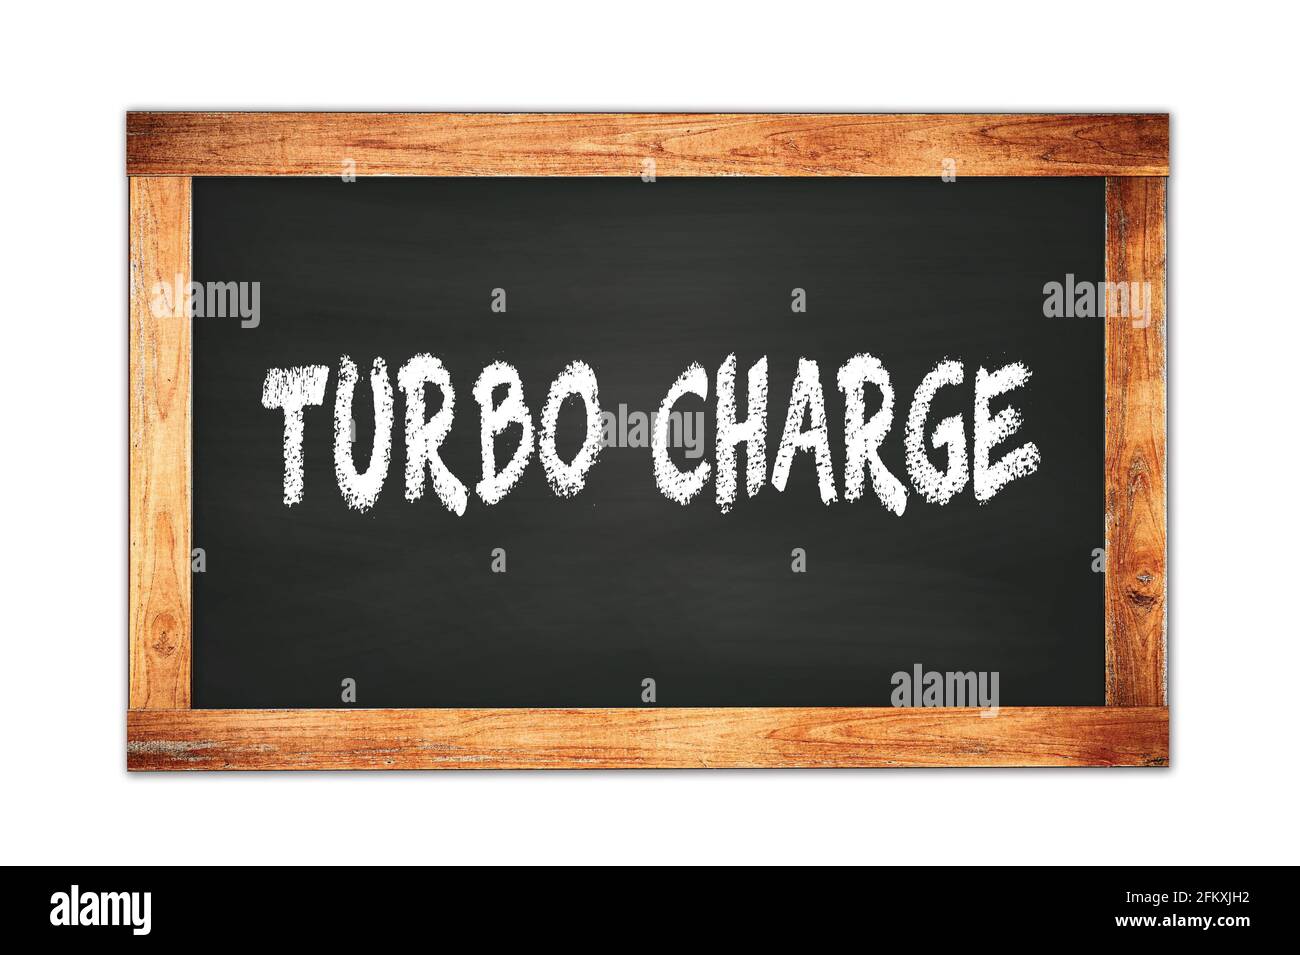 TURBO  CHARGE text written on black wooden frame school blackboard. Stock Photo